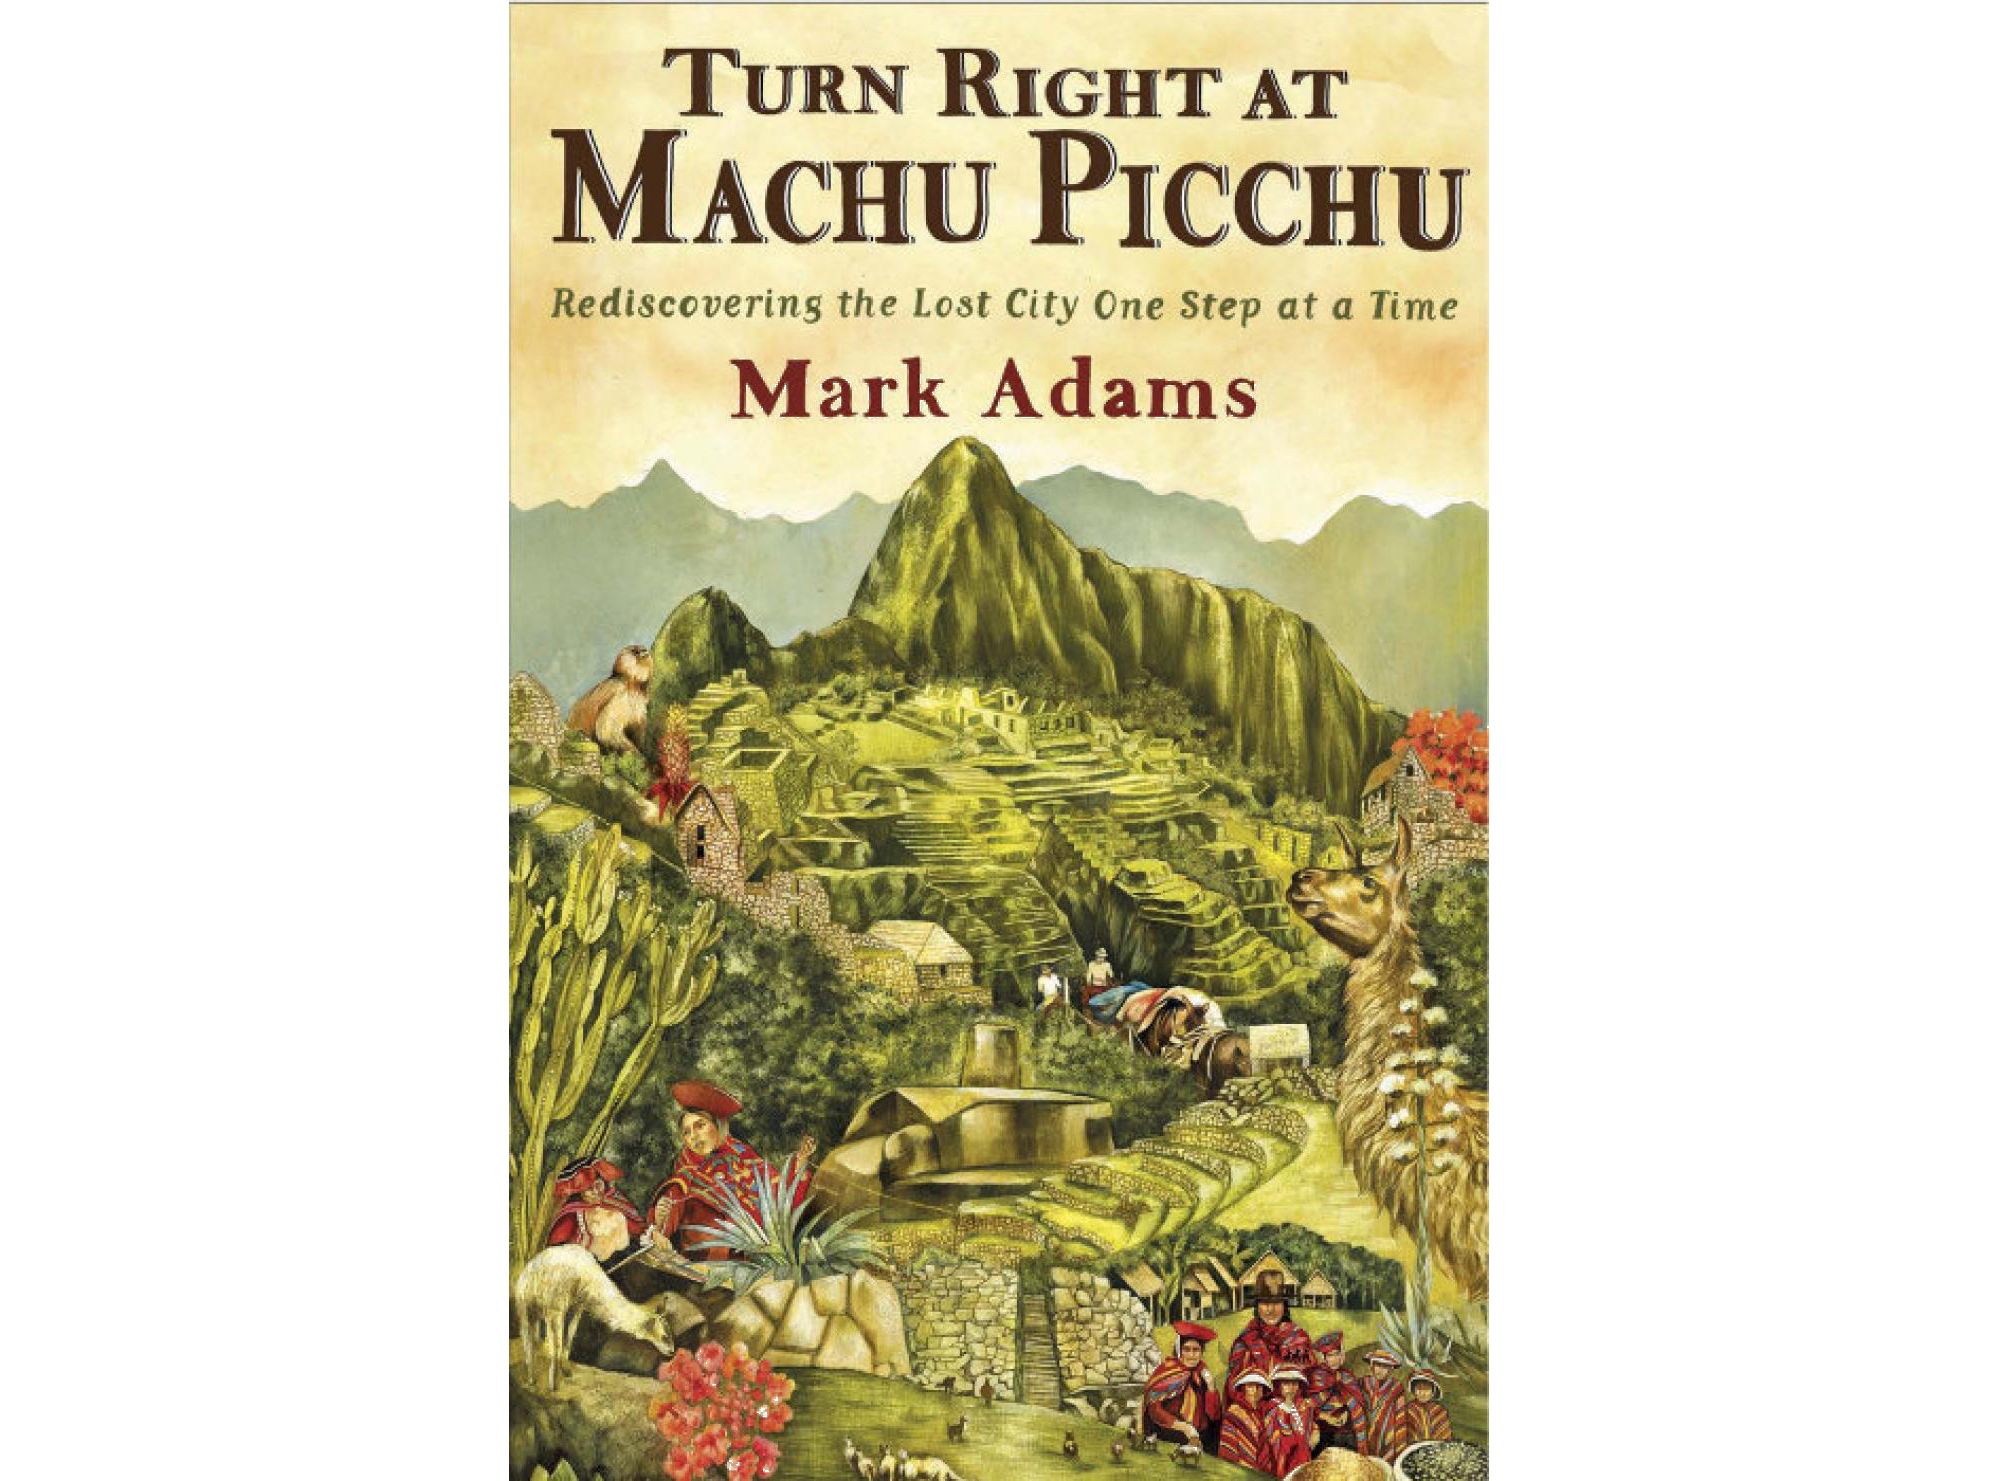 Turn Right at Machu Picchu